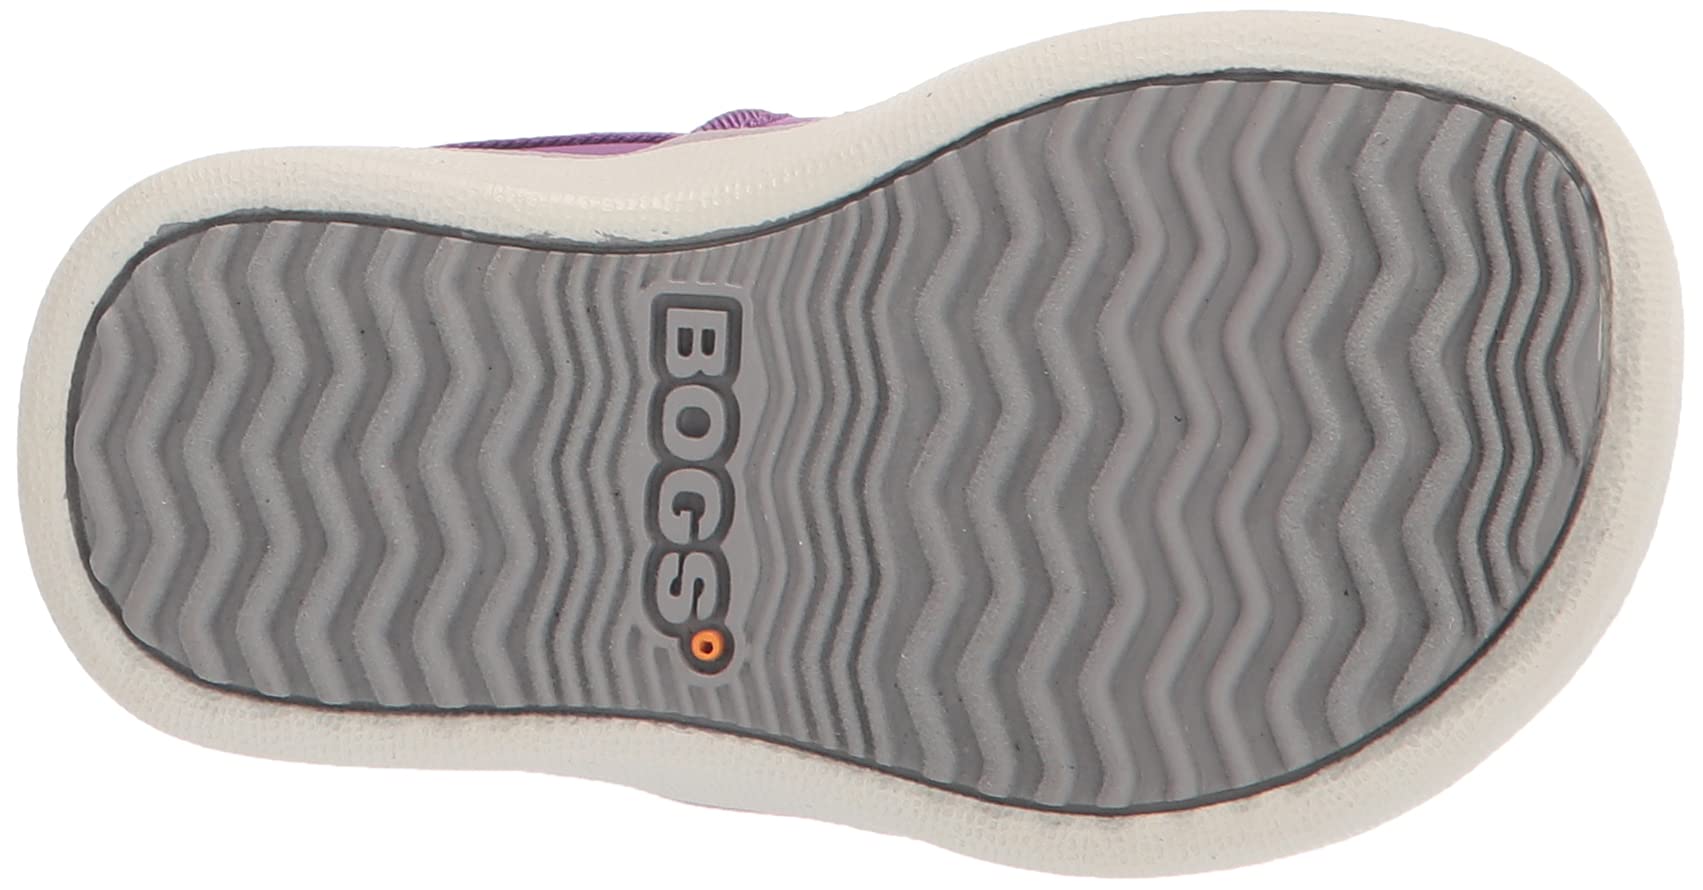 BOGS Unisex-Child Kicker Chelsea Water Resistant Boot